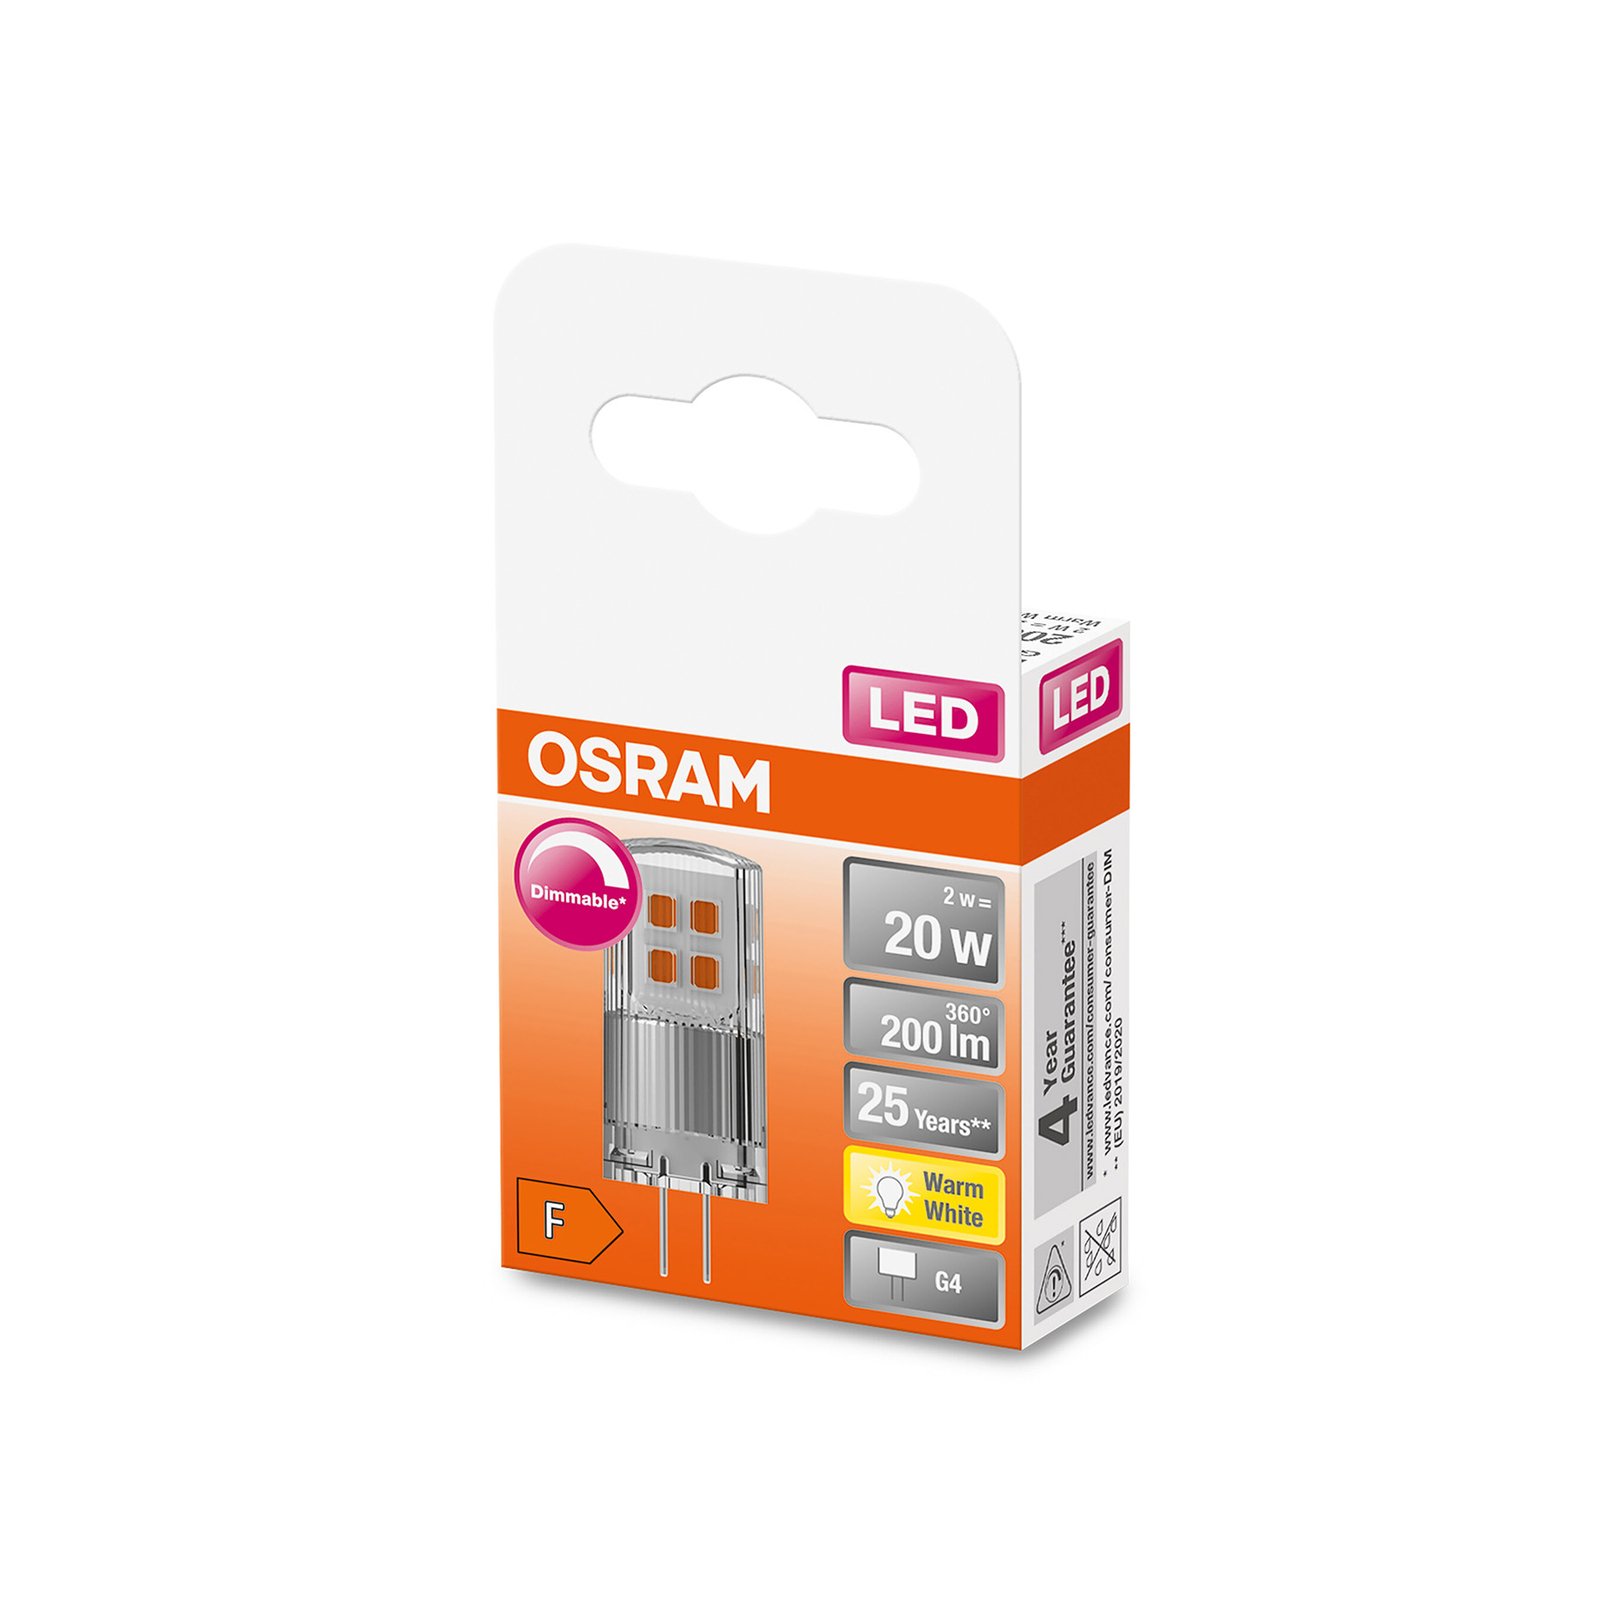 OSRAM PIN 12V LED base de pinos G4 2W 200lm regulável